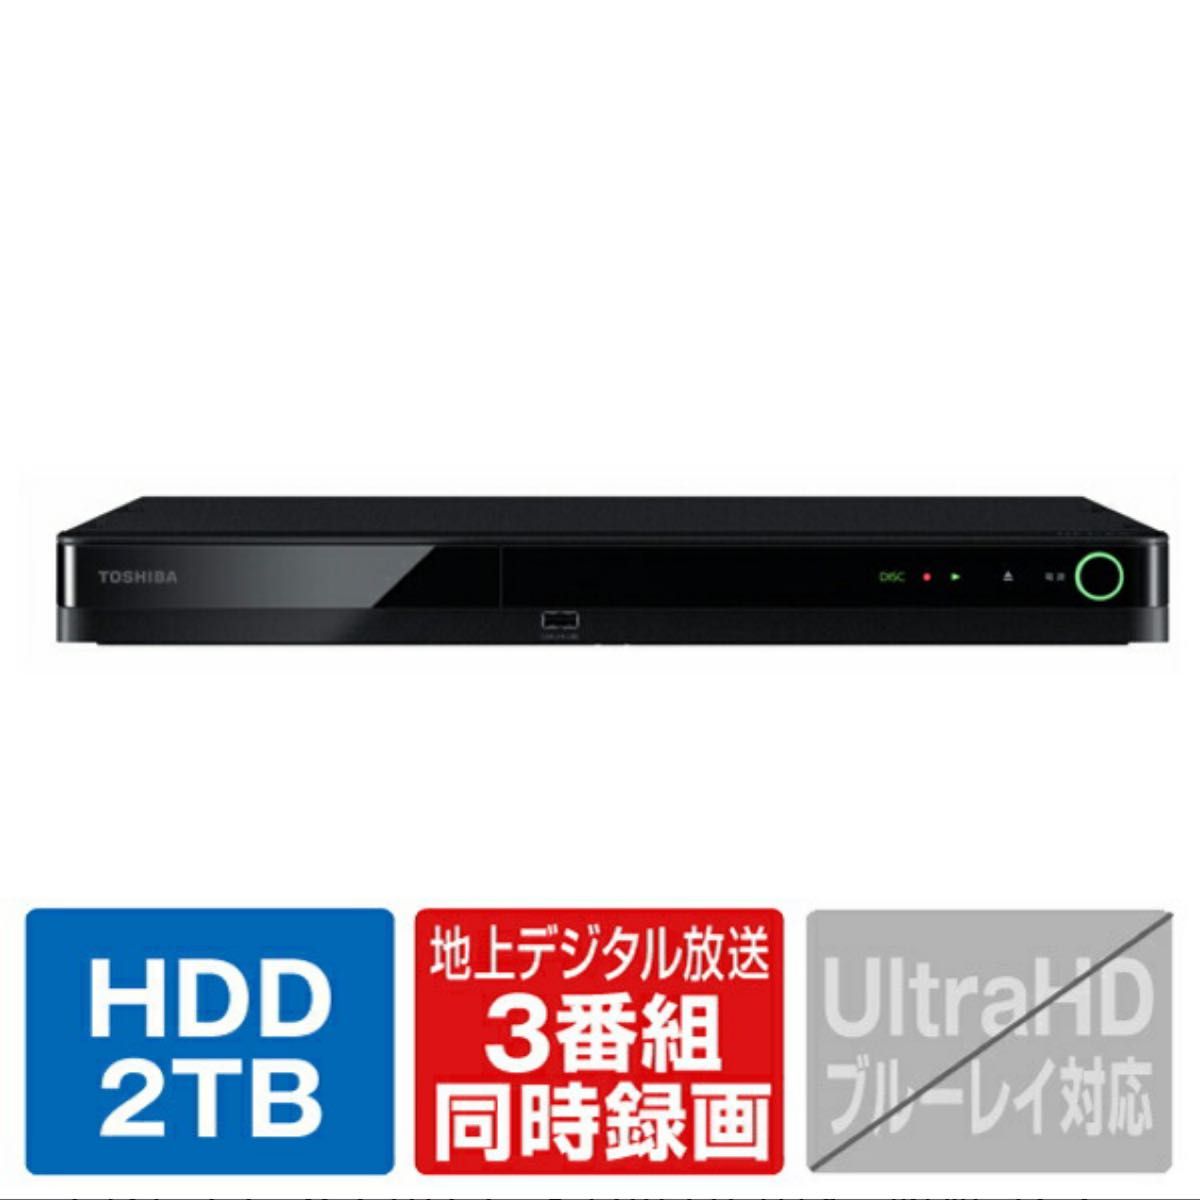 TOSHIBA/REGZA 2TB HDD内蔵ブルーレイ DBR-T2010 - ruizvillandiego.com